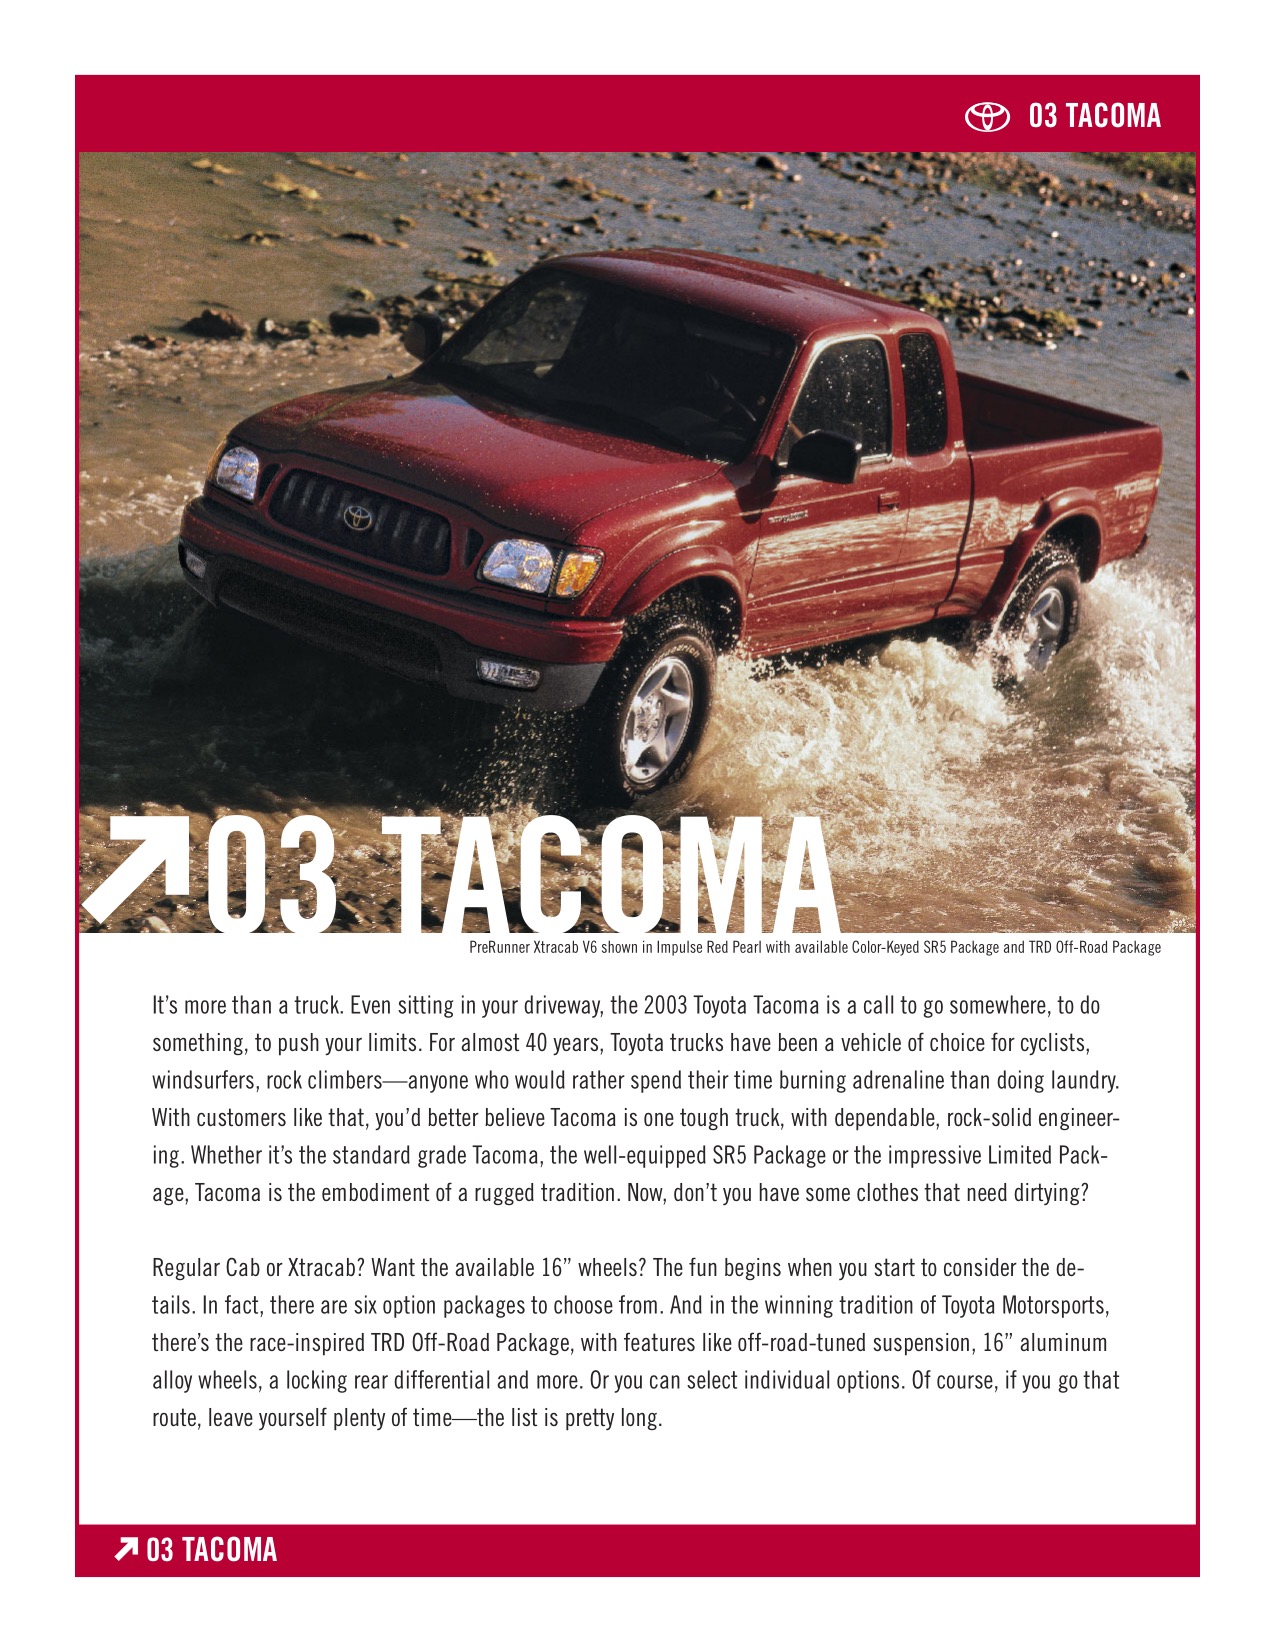 2003 Toyota Tacoma Brochure